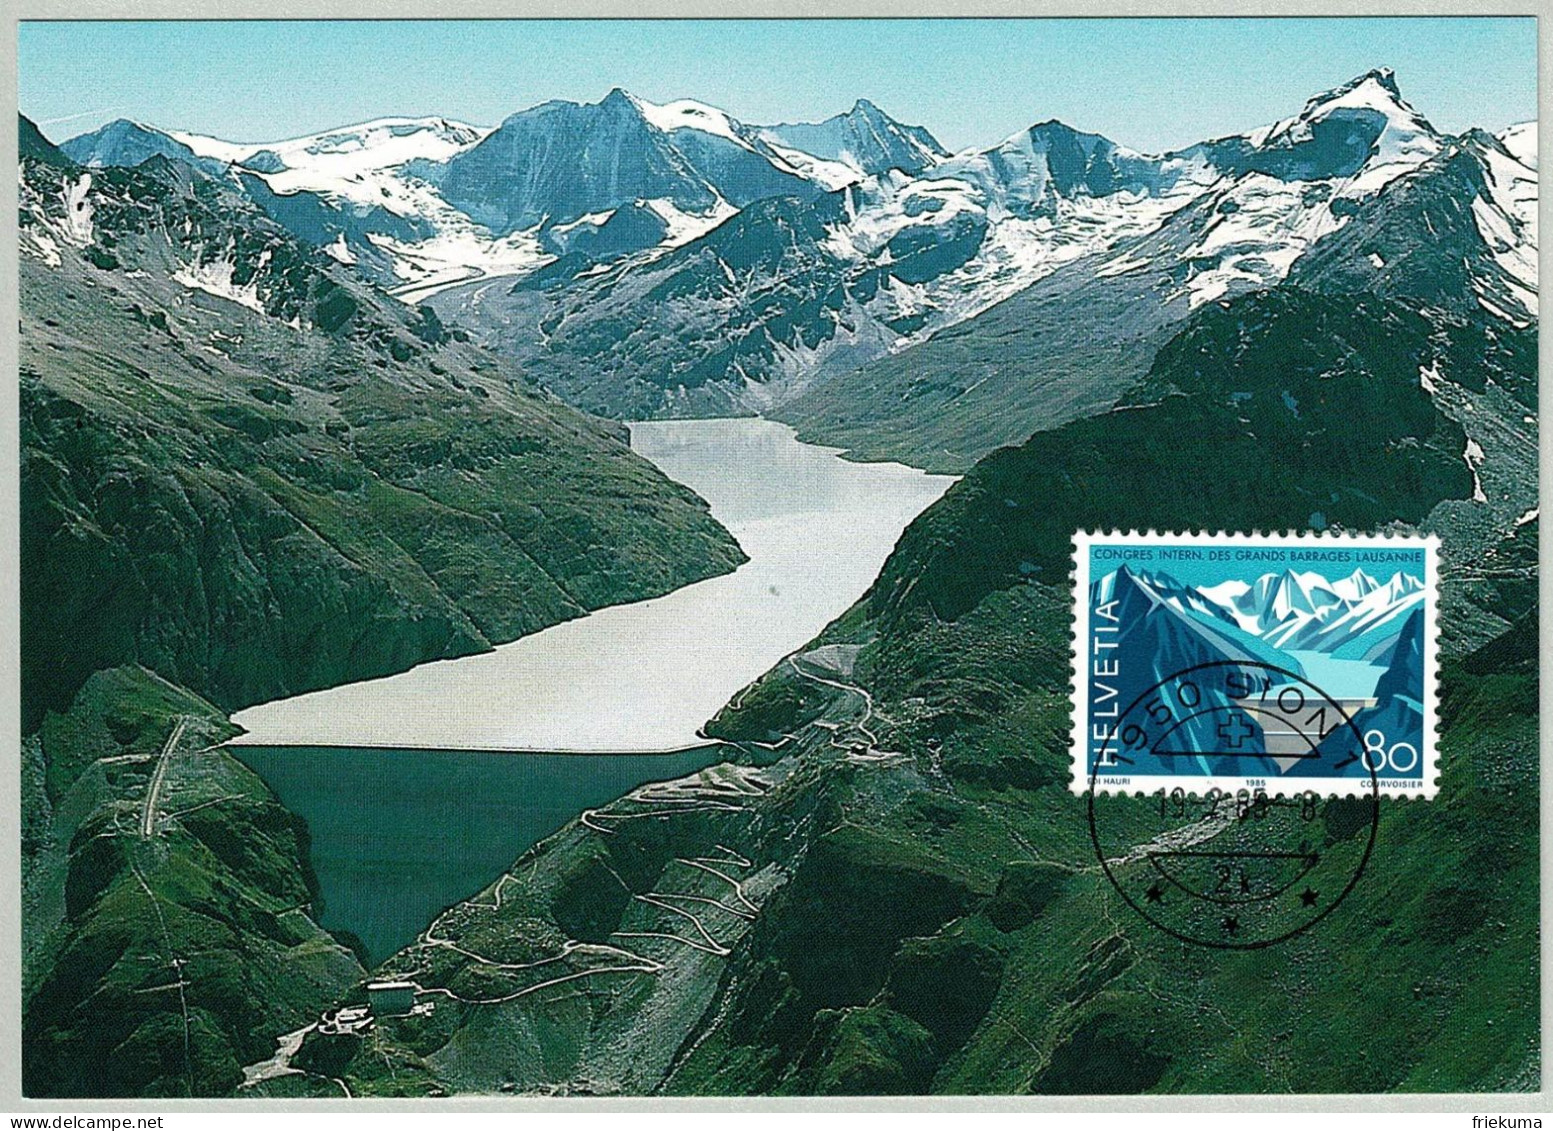 Schweiz / Helvetia 1985, Maximumkarte Kongress Für Talsperren Lausanne, Staumauer Grand-Dixence, Barrage / Dam, Sion - Agua